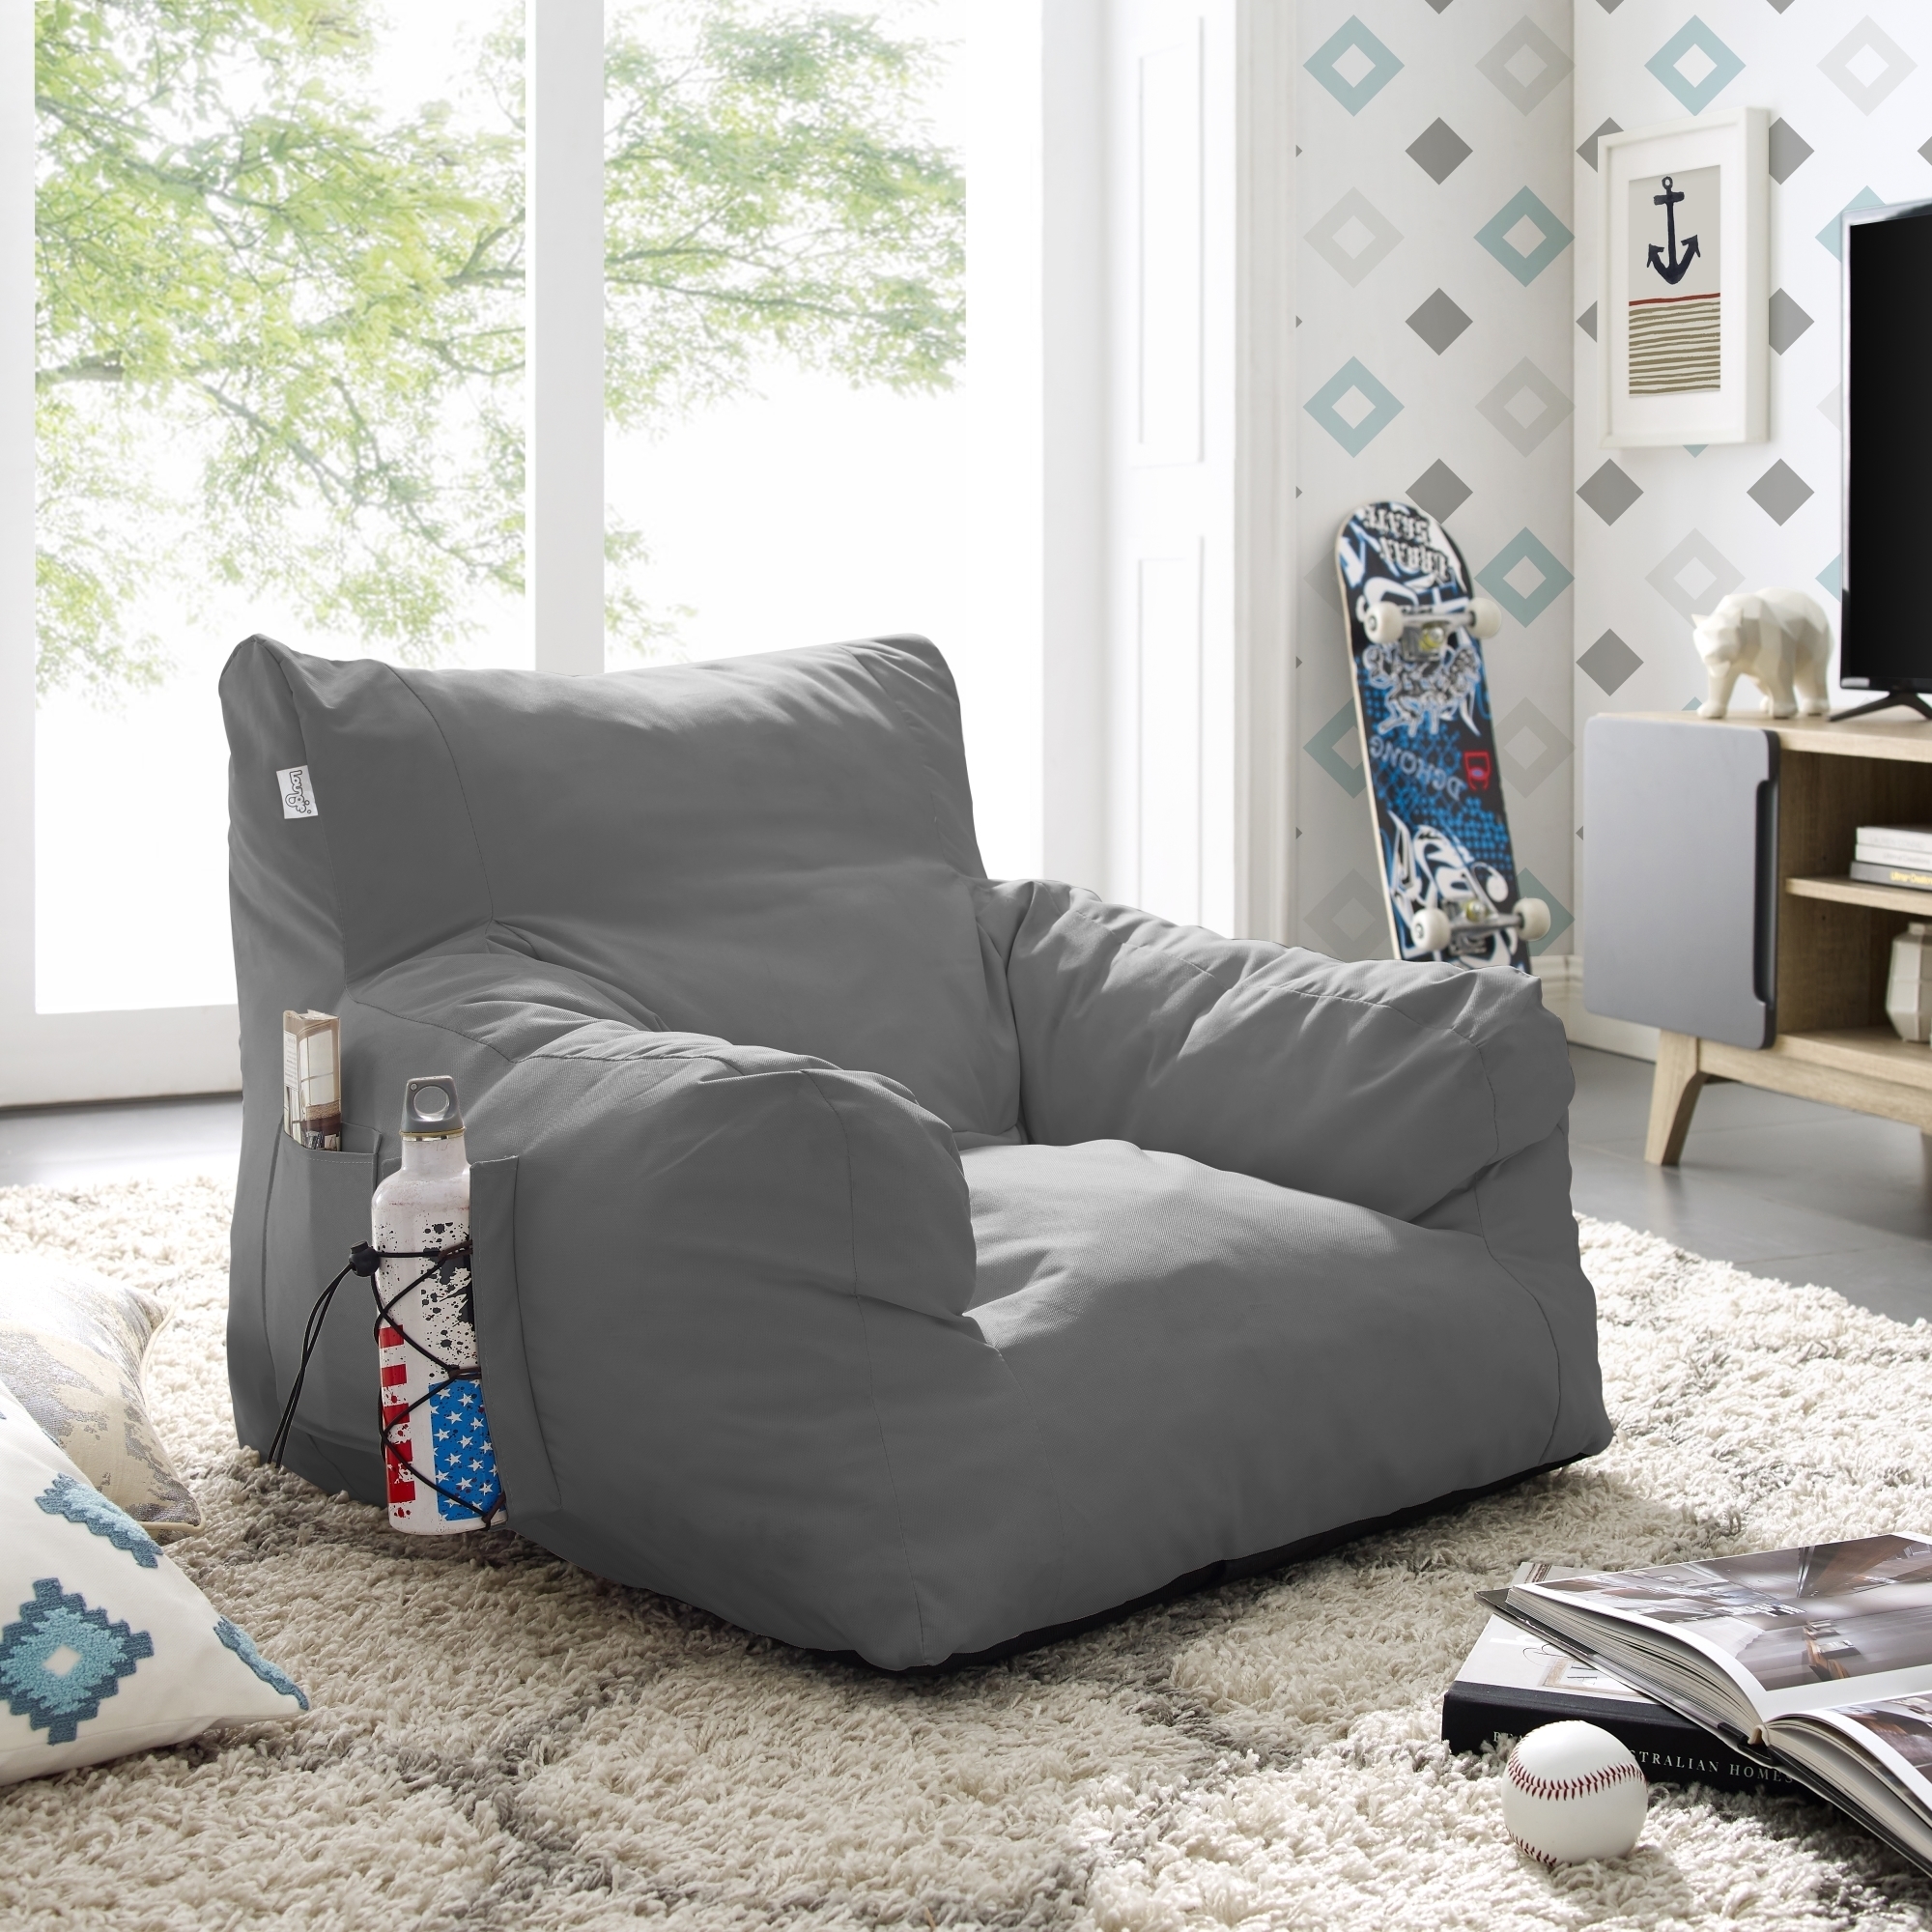 Loungie Comfy Foam Lounge Chair-Nylon Bean Bag-Indoor- Outdoor-Self Expanding-Water Resistant - Grey